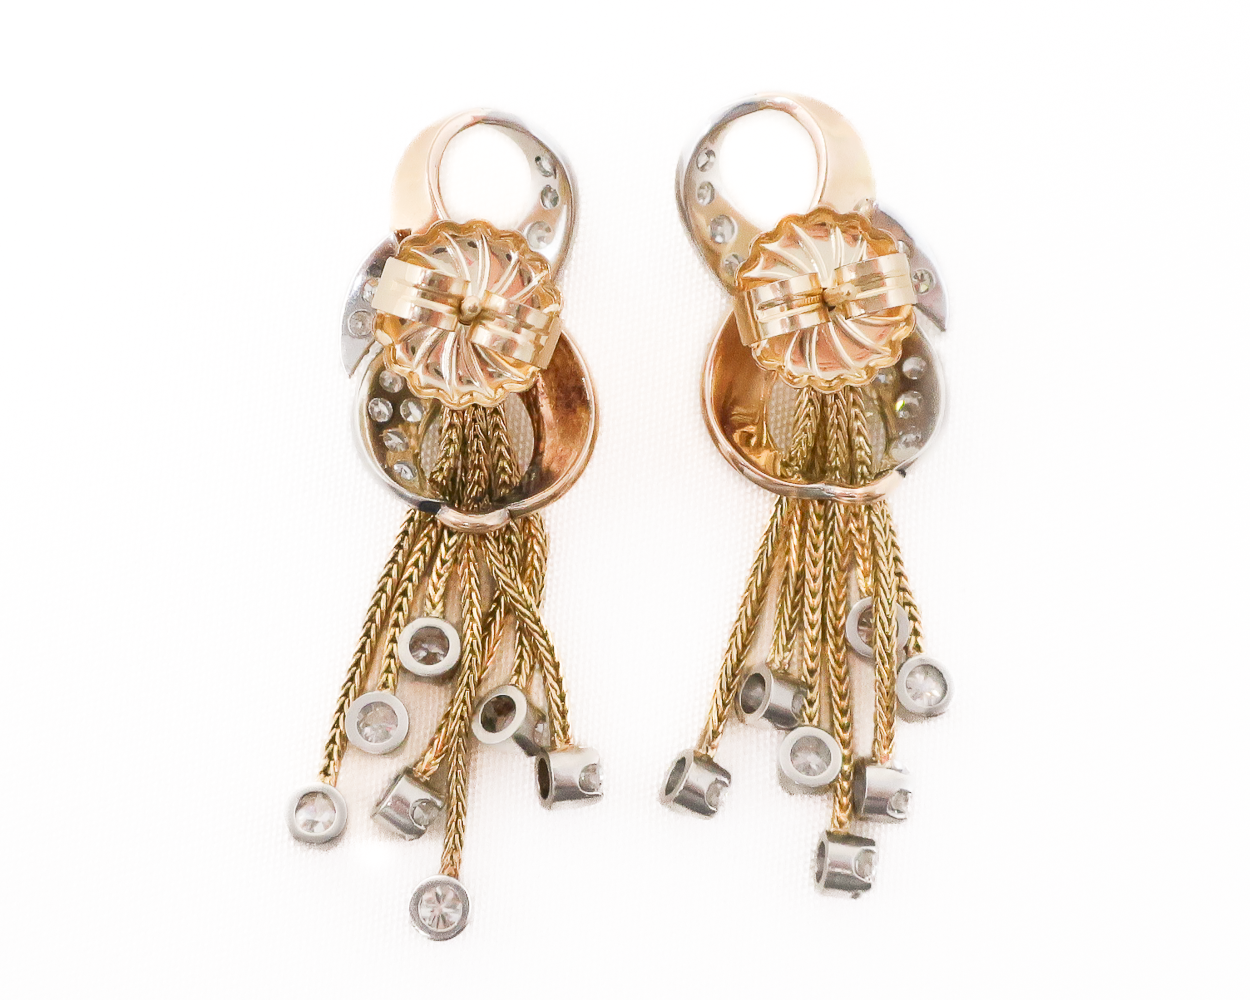 Midcentury Diamond Earrings with Gold Tassels